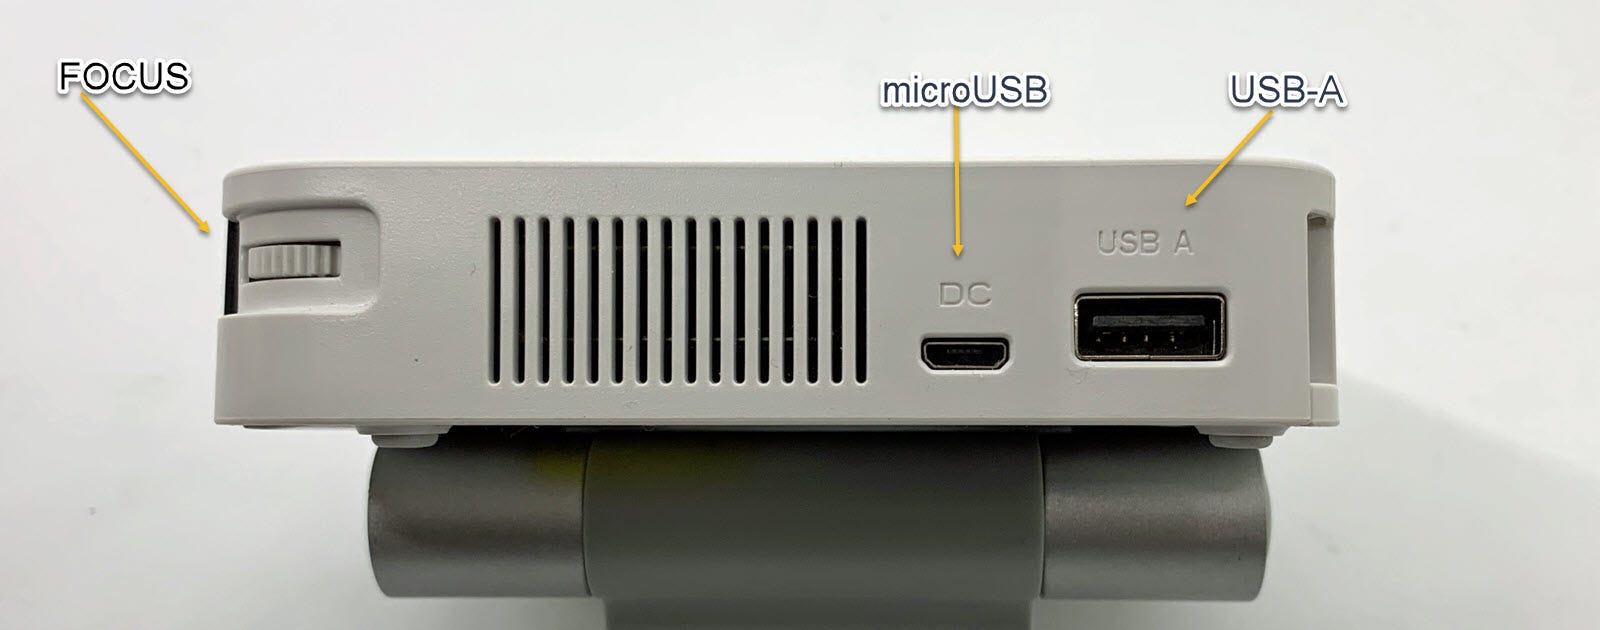 Gambar menunjukkan port USB